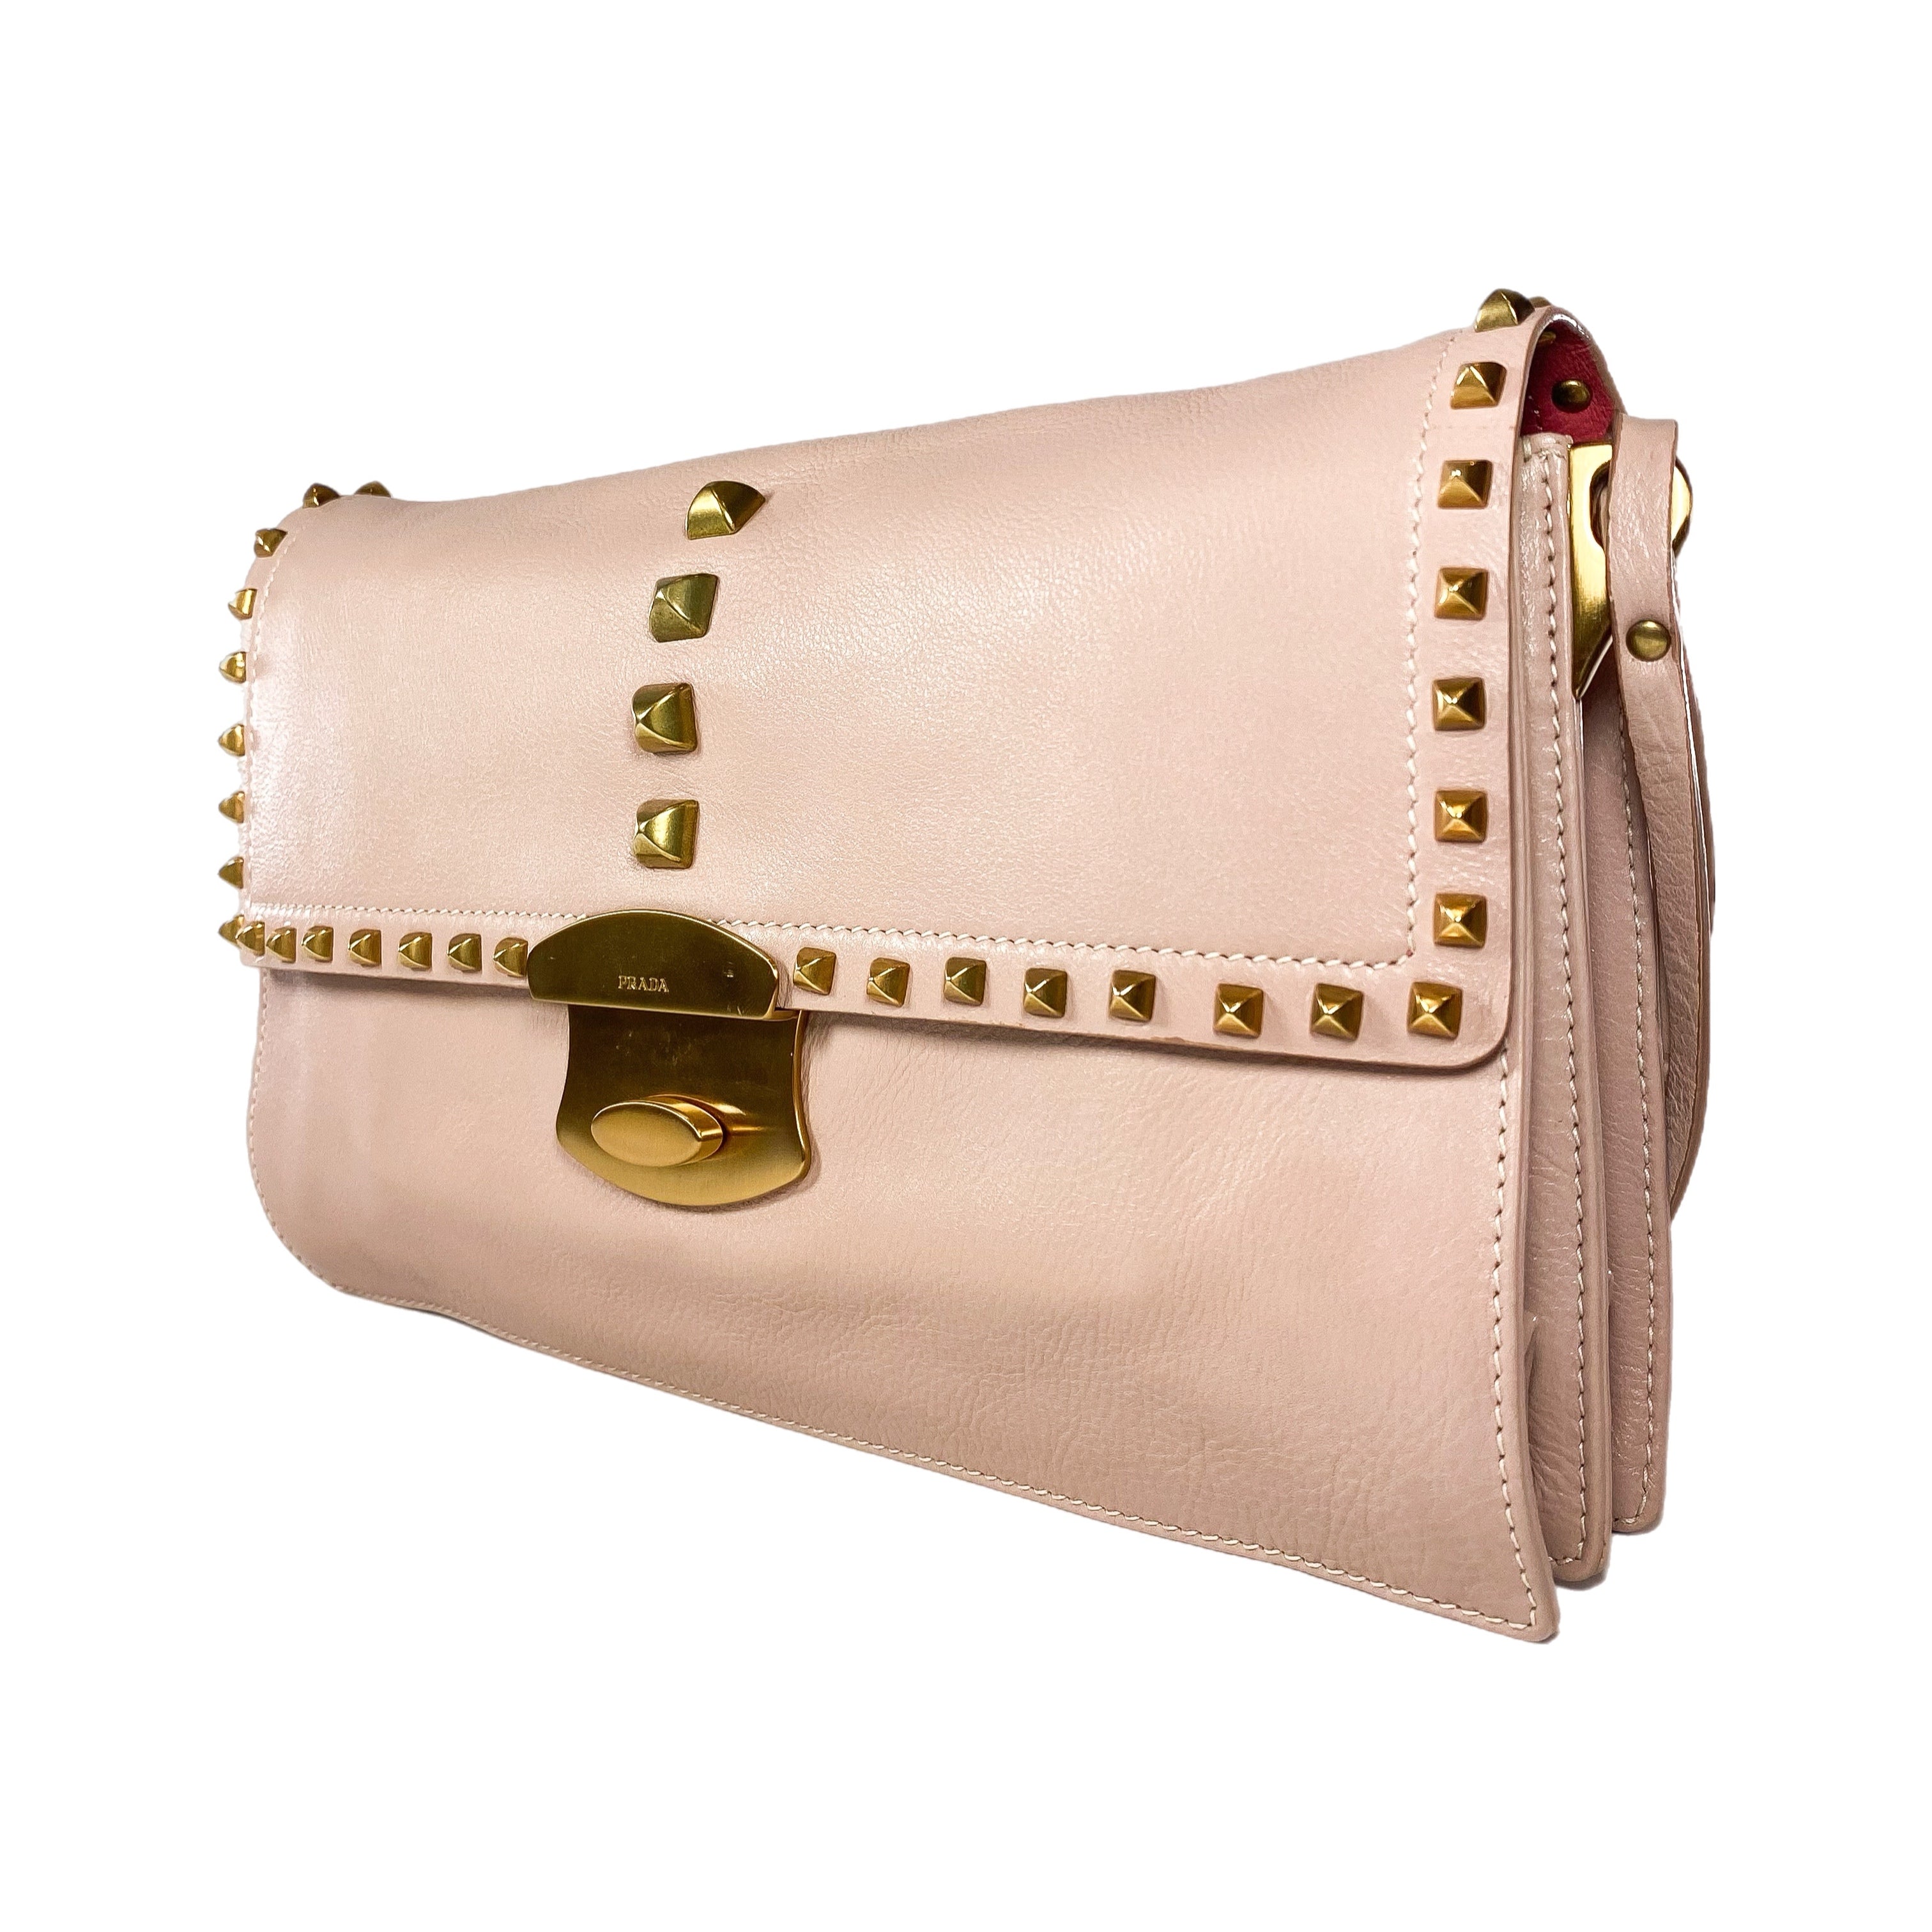 Prada Blush Studded Chain Strap Shoulder Bag